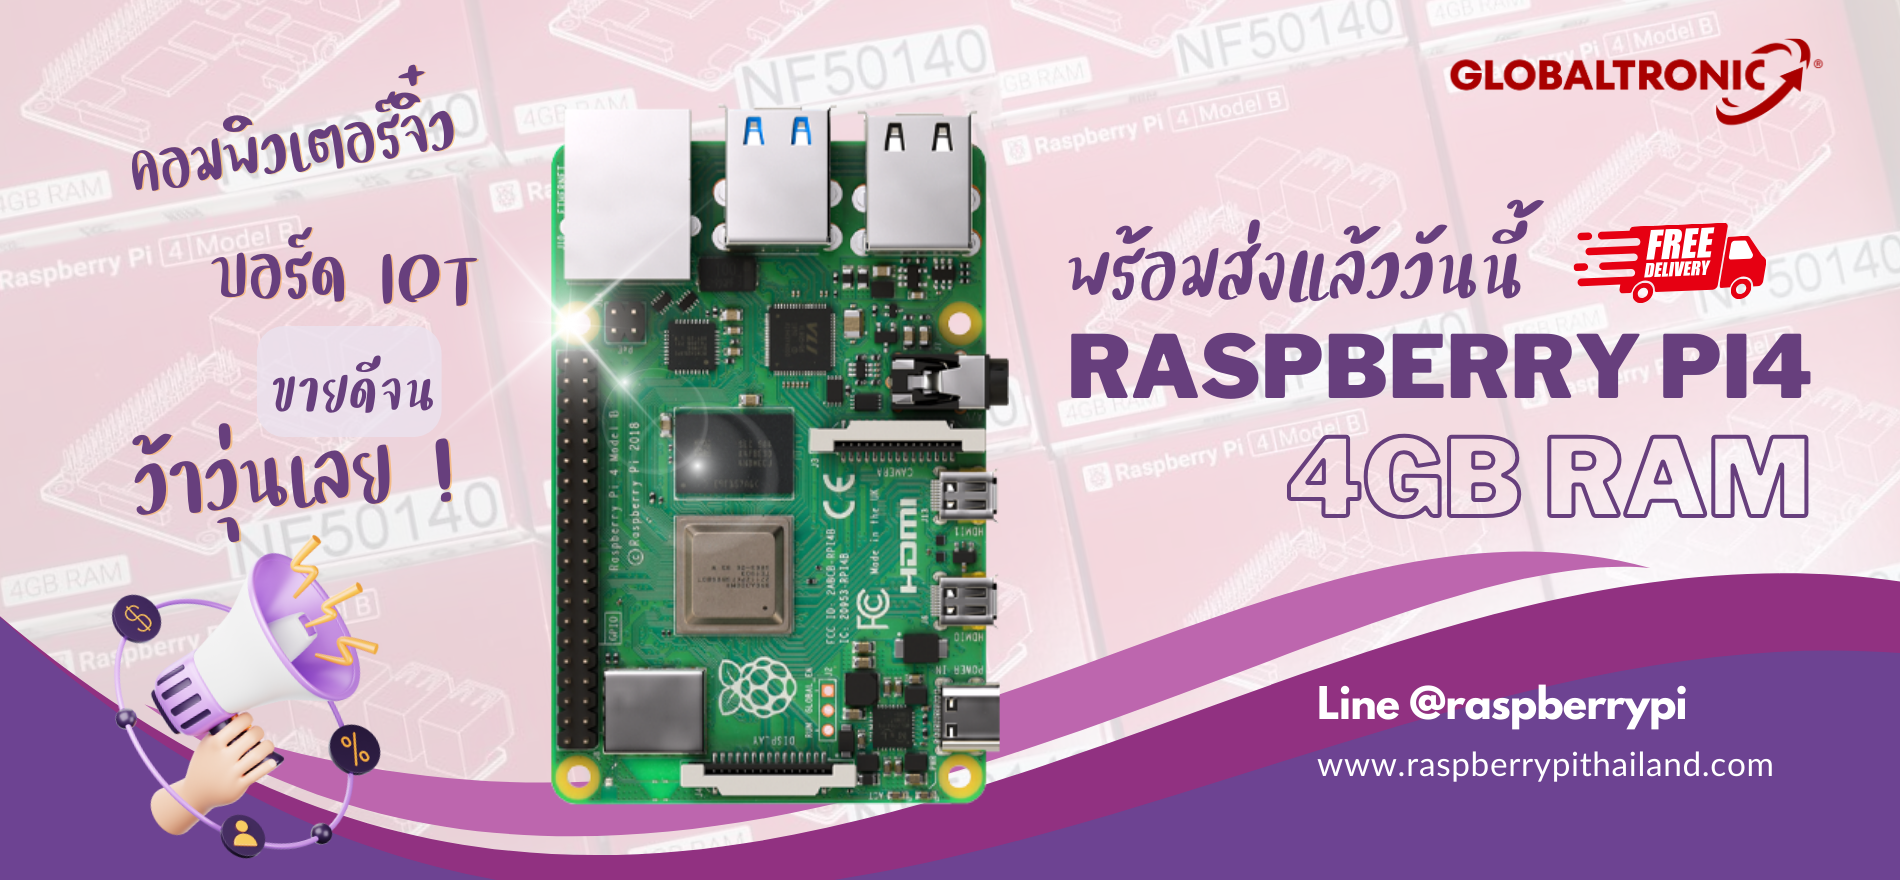 Raspberrypi4 4GB Ram-NF50140